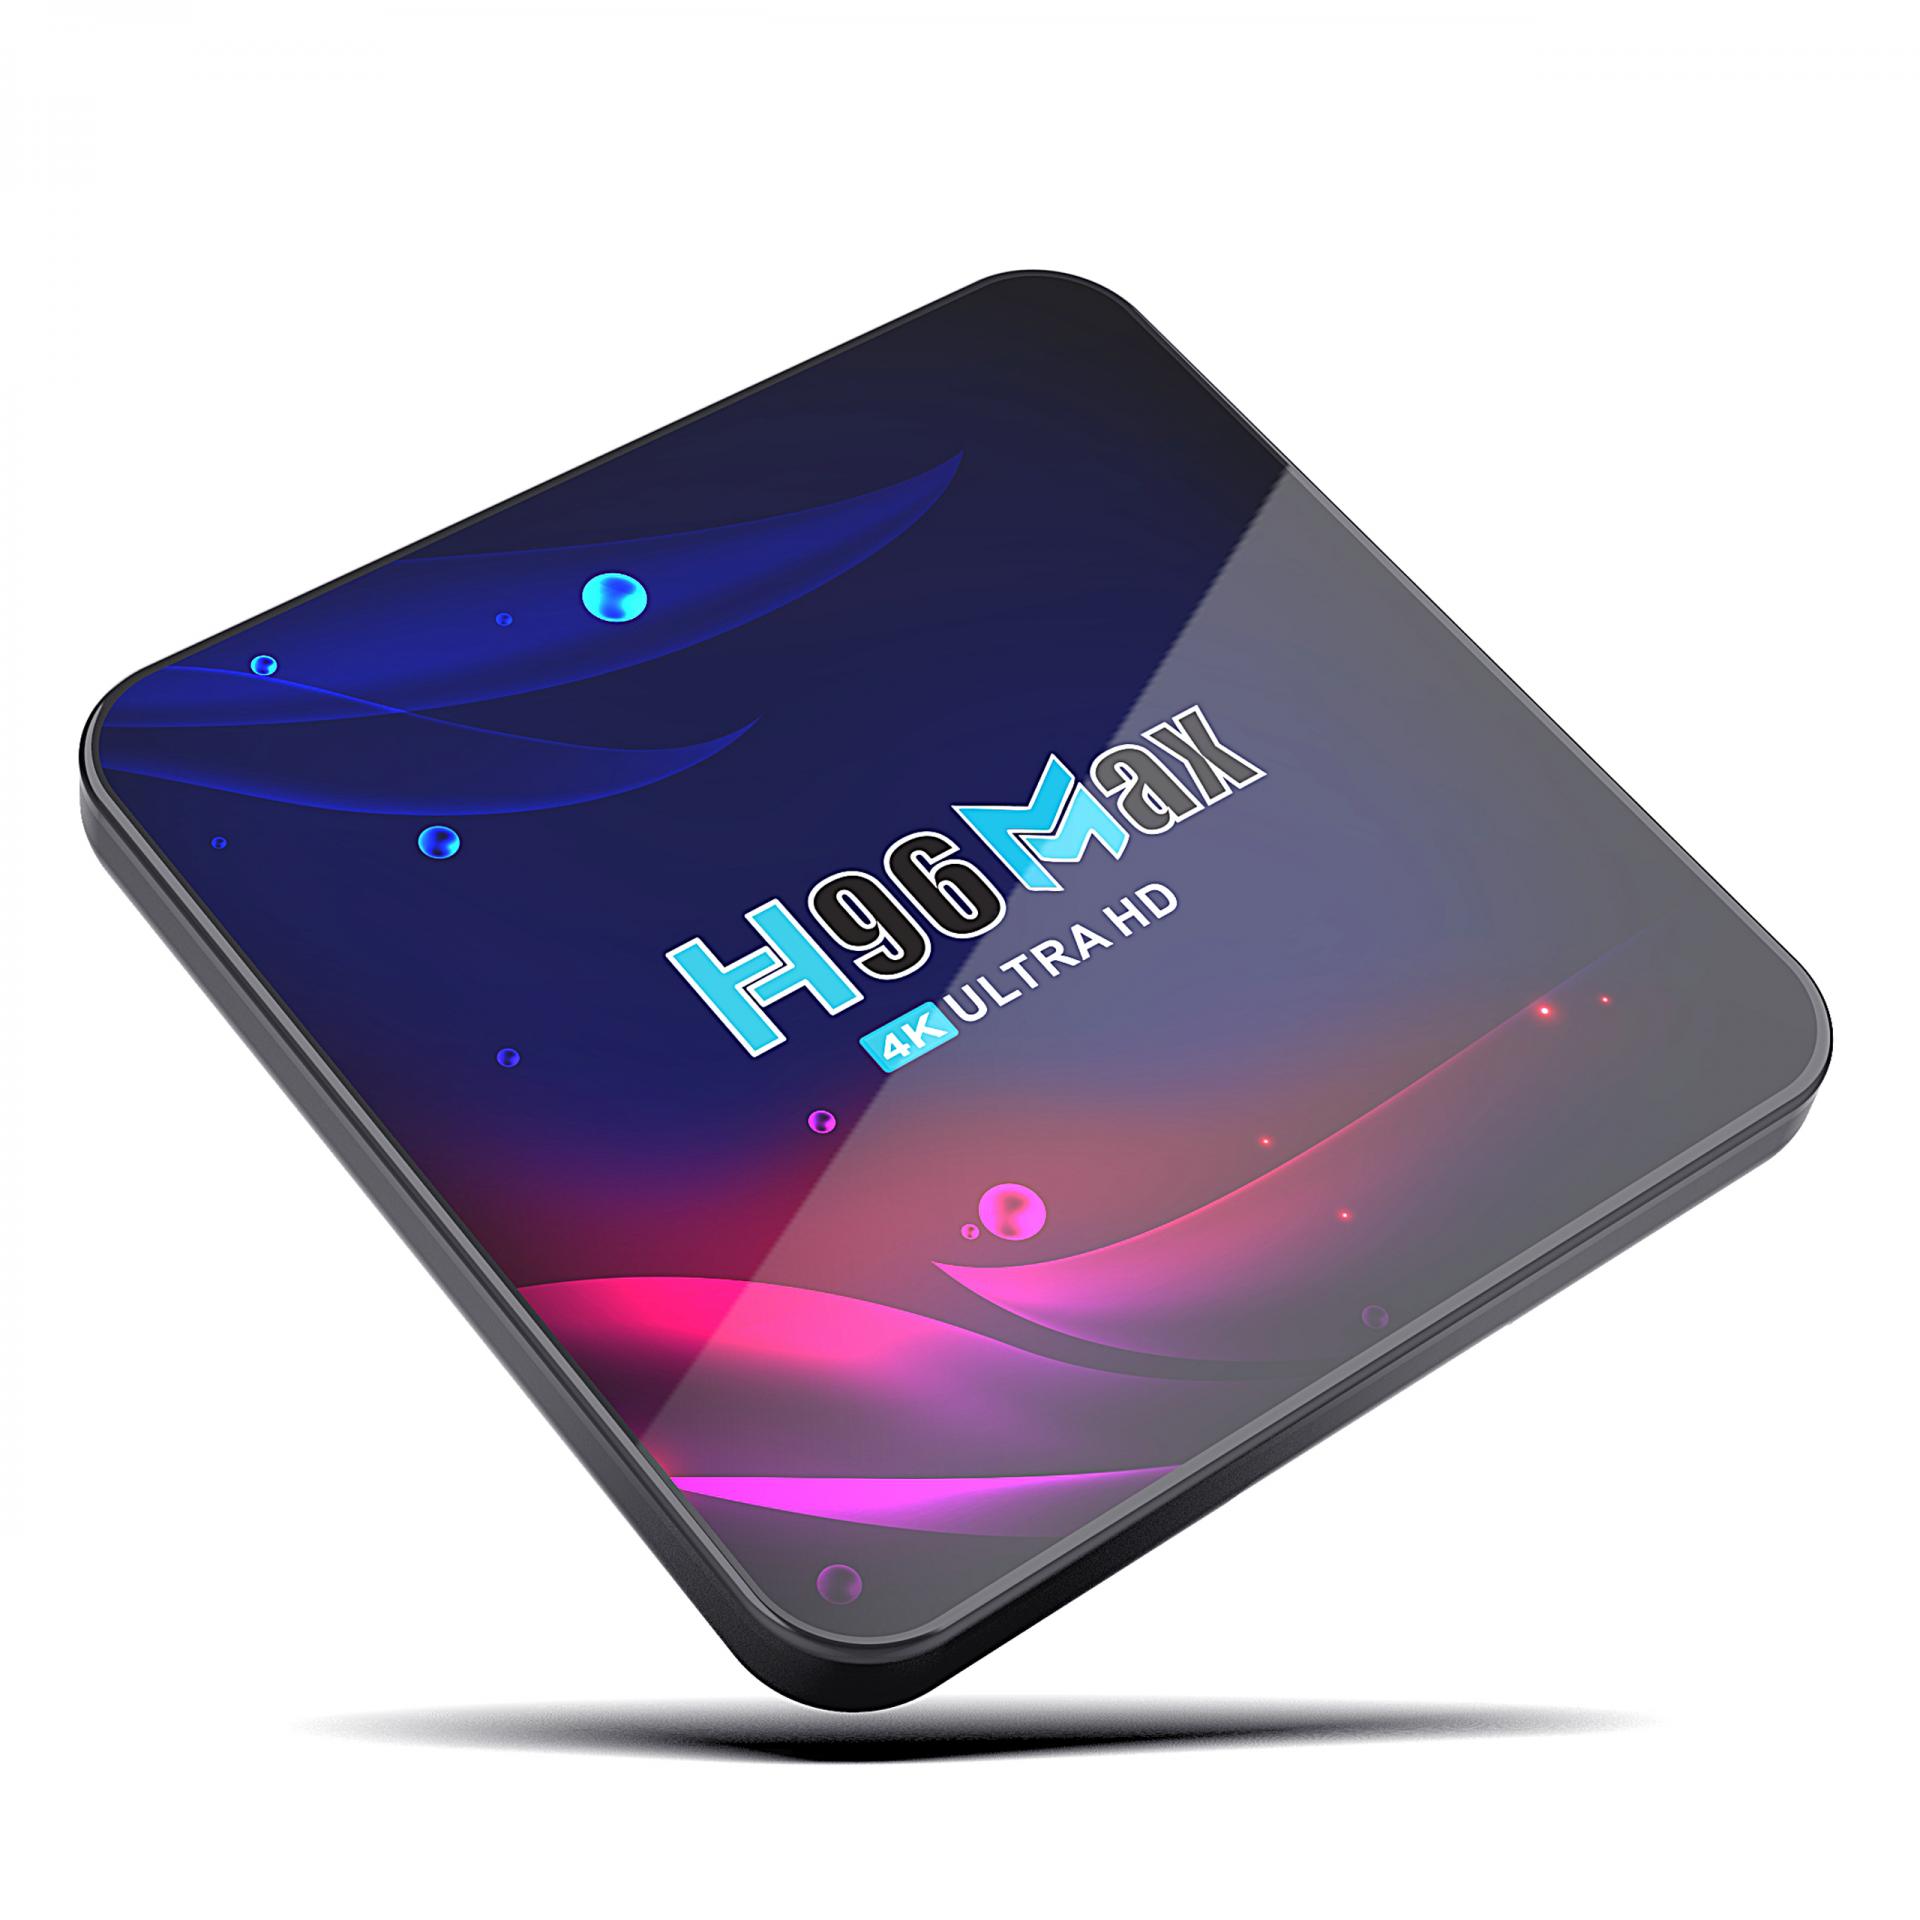 H96 MAX Rockchip 3318 V11 TV BOX 4K ott tv box Android 11 